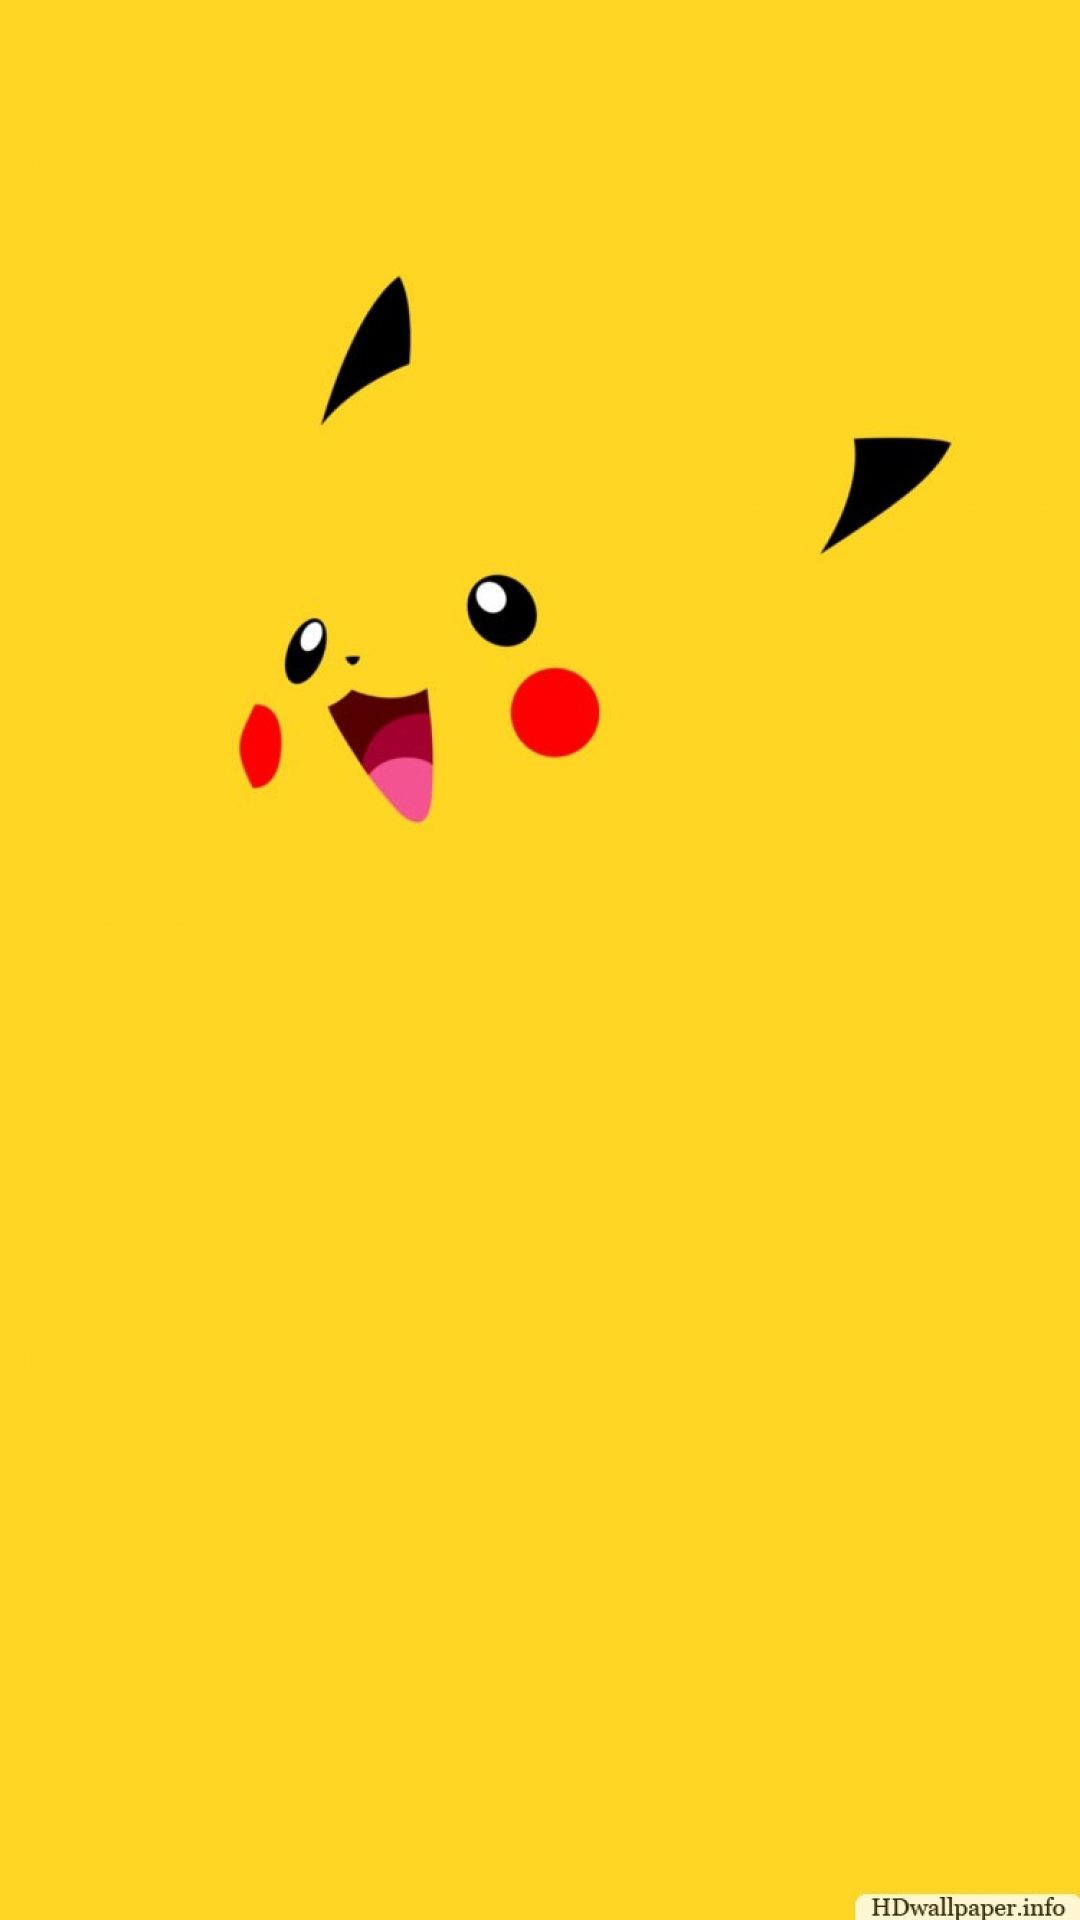 1080x1920 pikachu wallpaper iphone 6